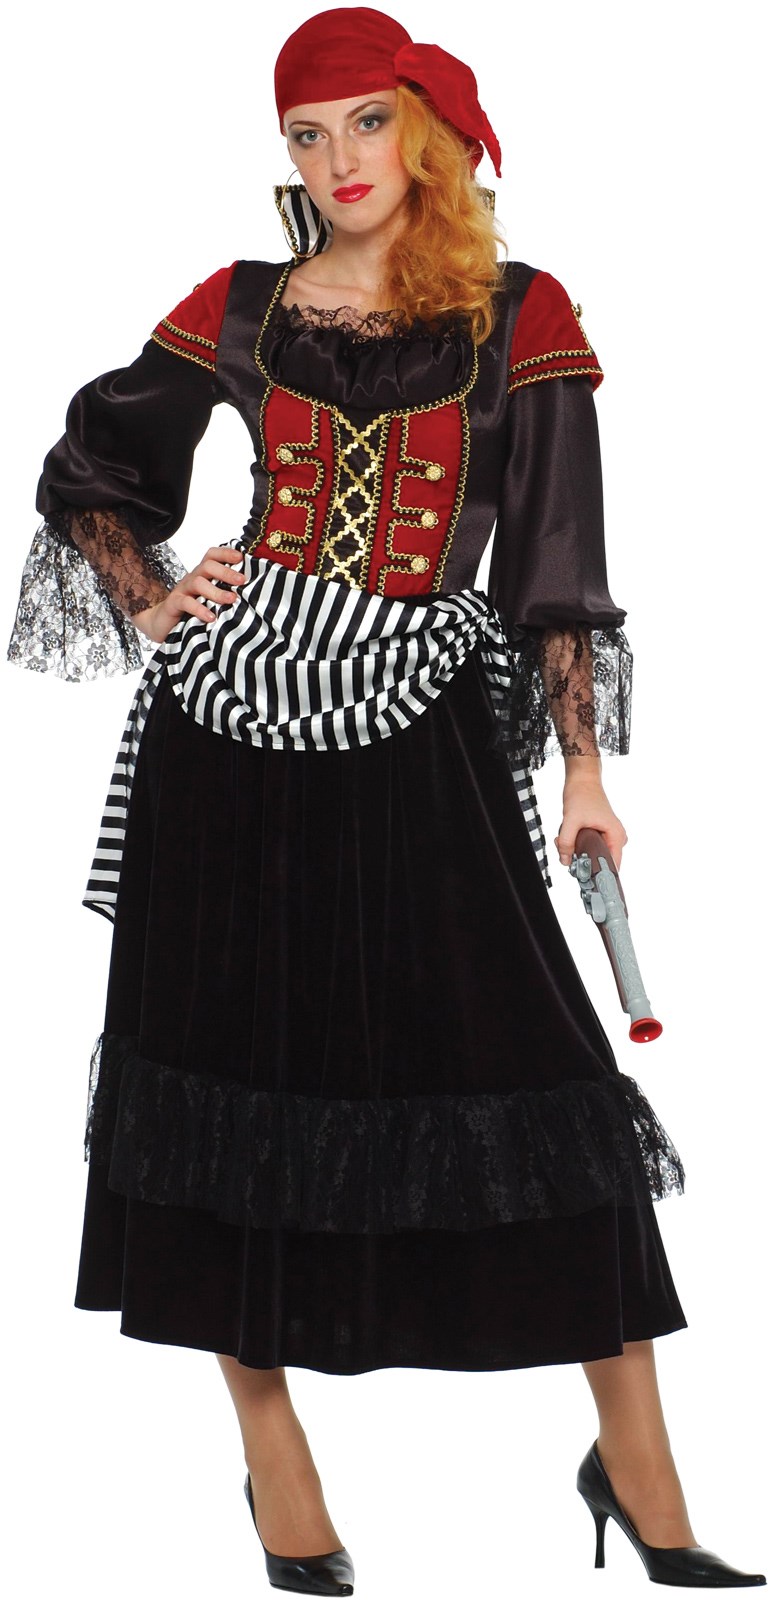 Treasure Pirate Wench Adult Costume